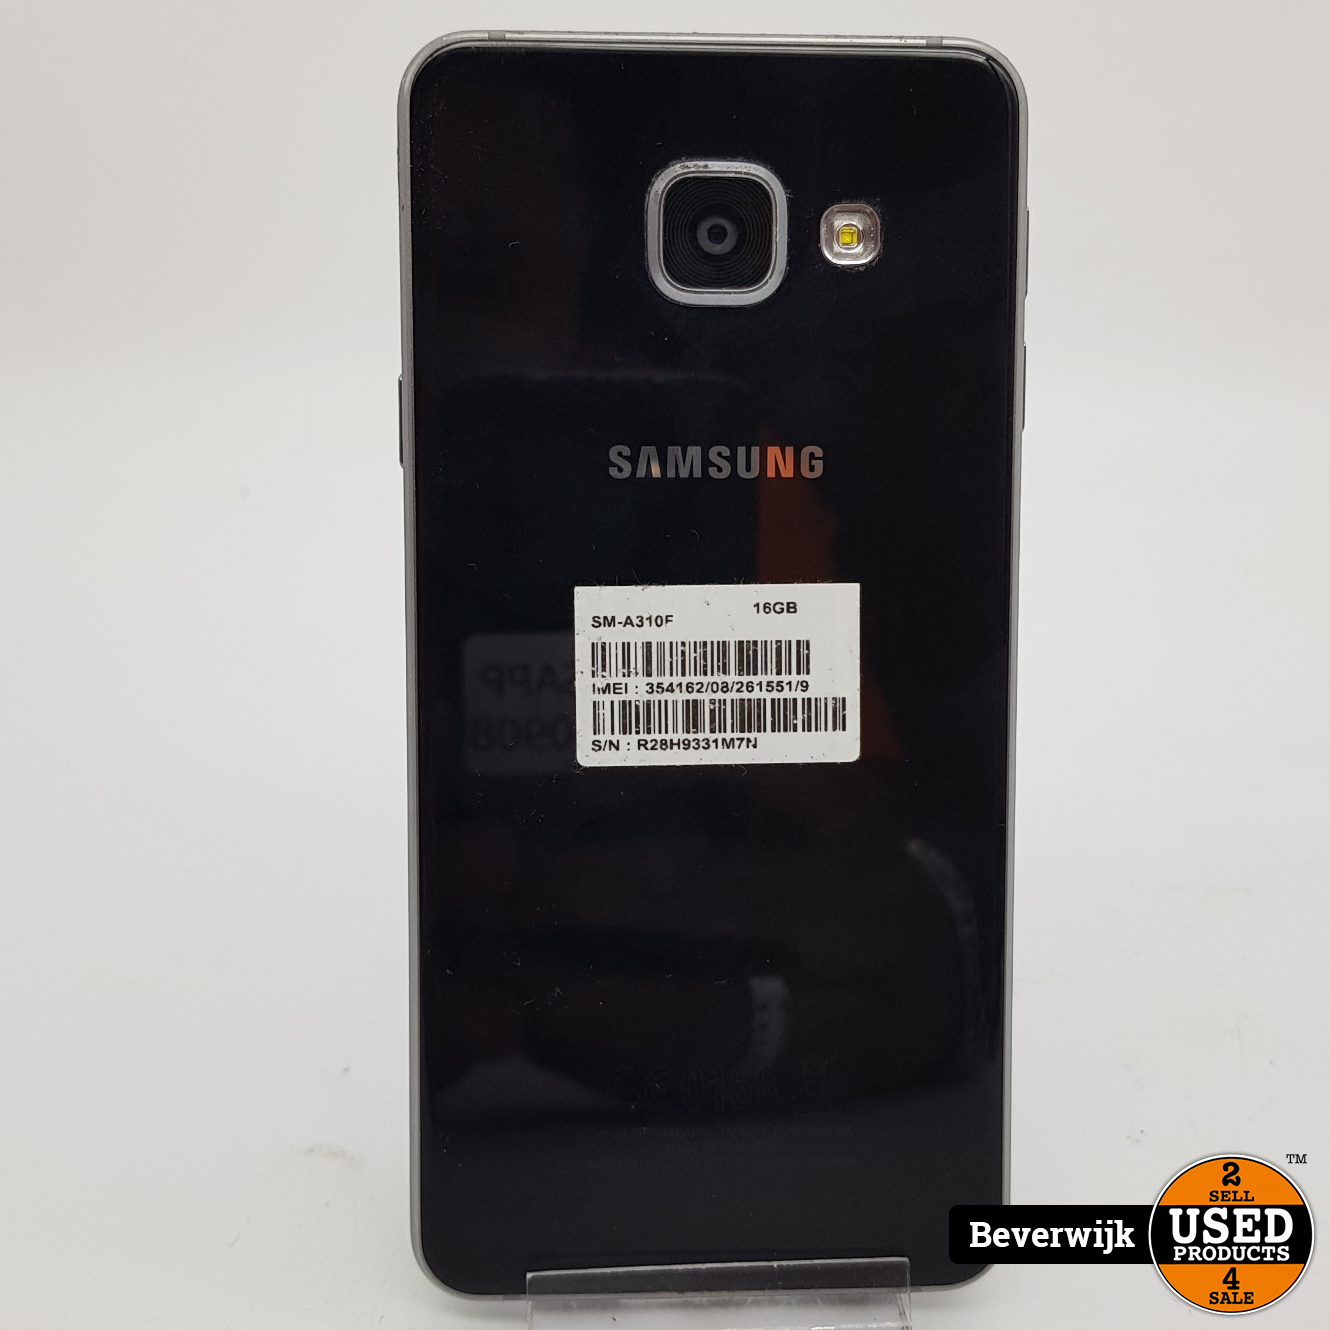 ademen schrijven Masaccio Samsung Galaxy A3 2016 16GB Black - In Prima staat - Used Products Beverwijk